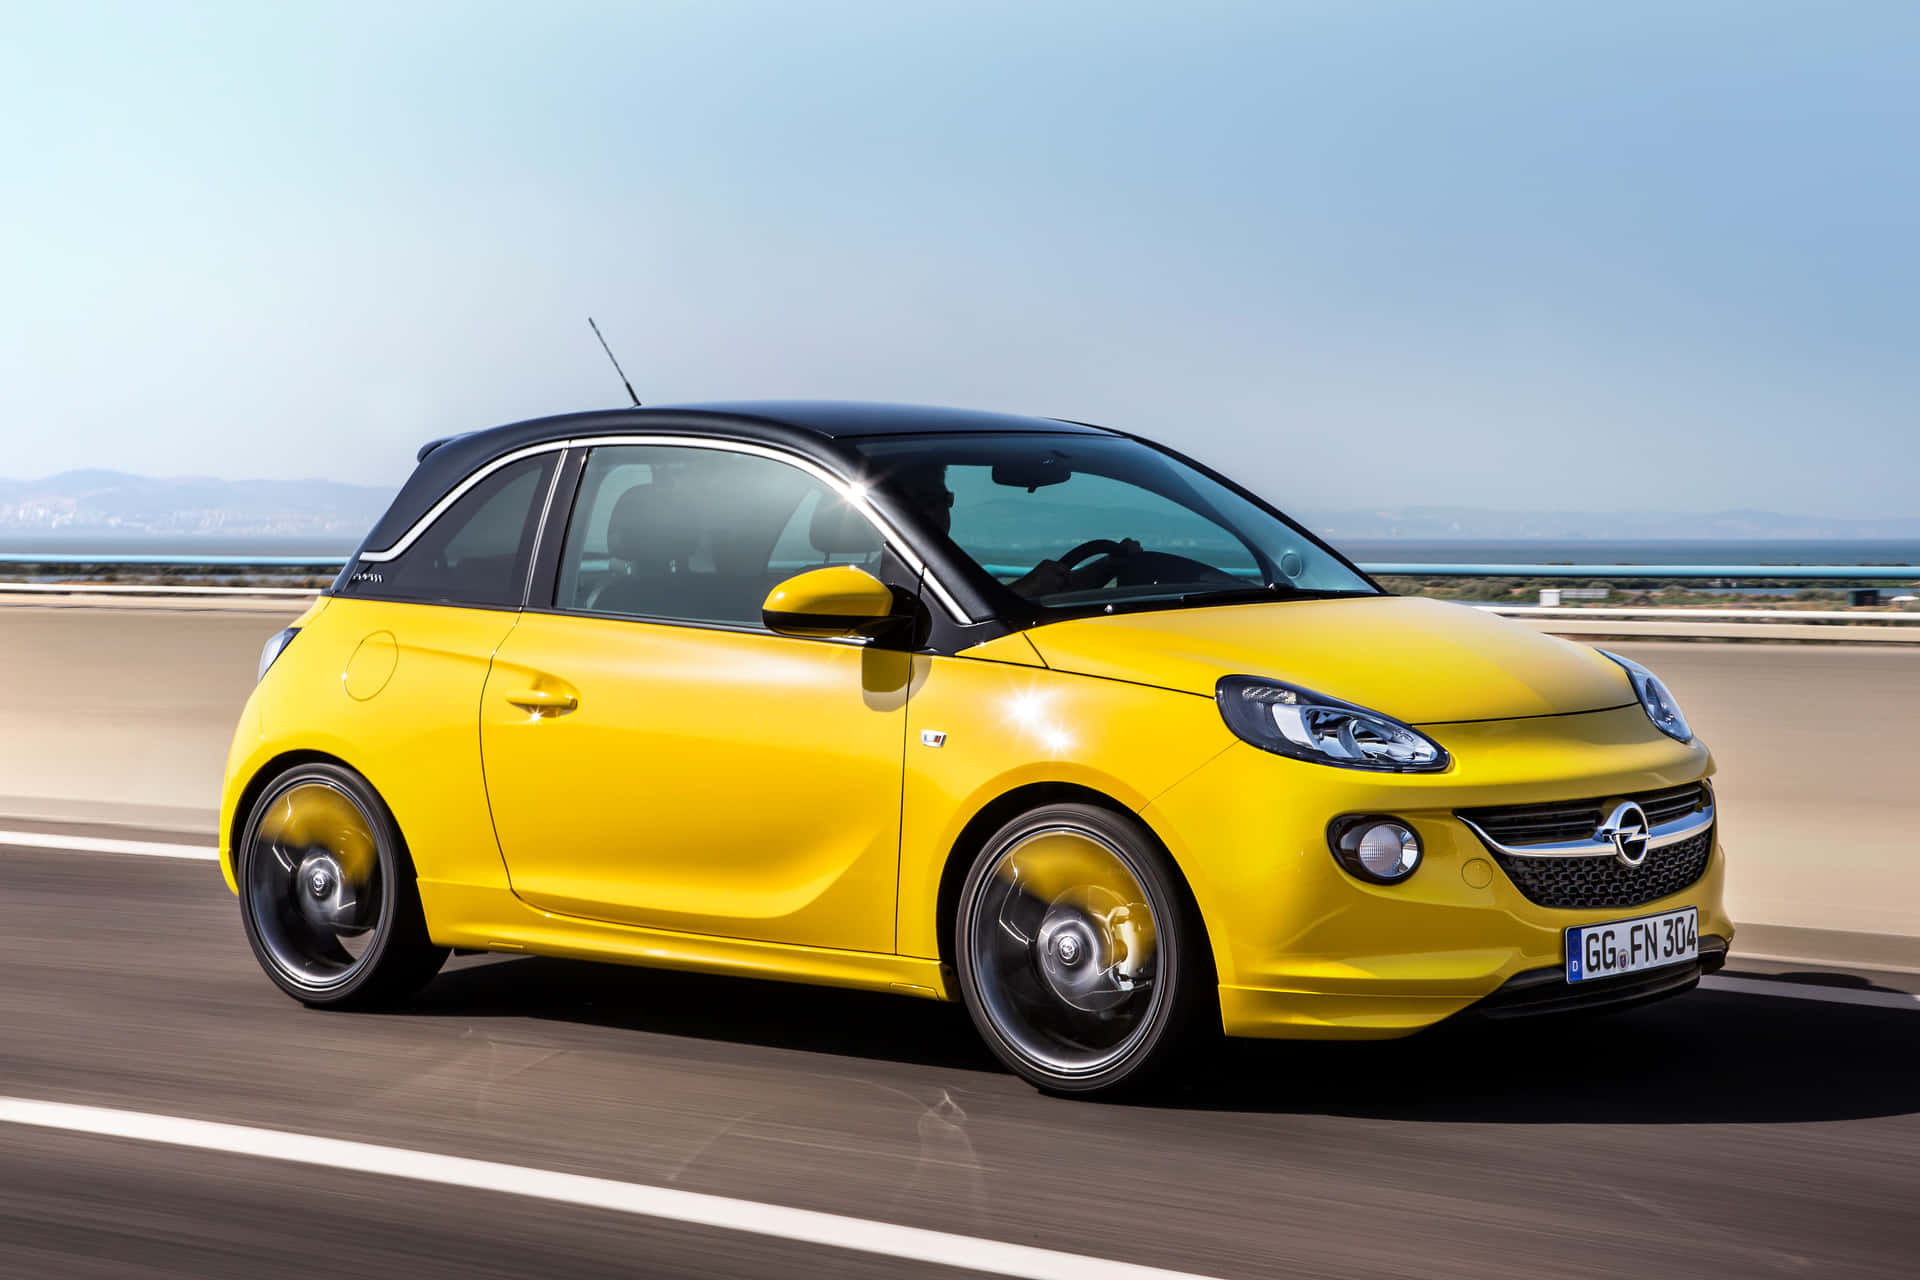 Caption: Opel Adam - Stylish Urban Compact Car Wallpaper